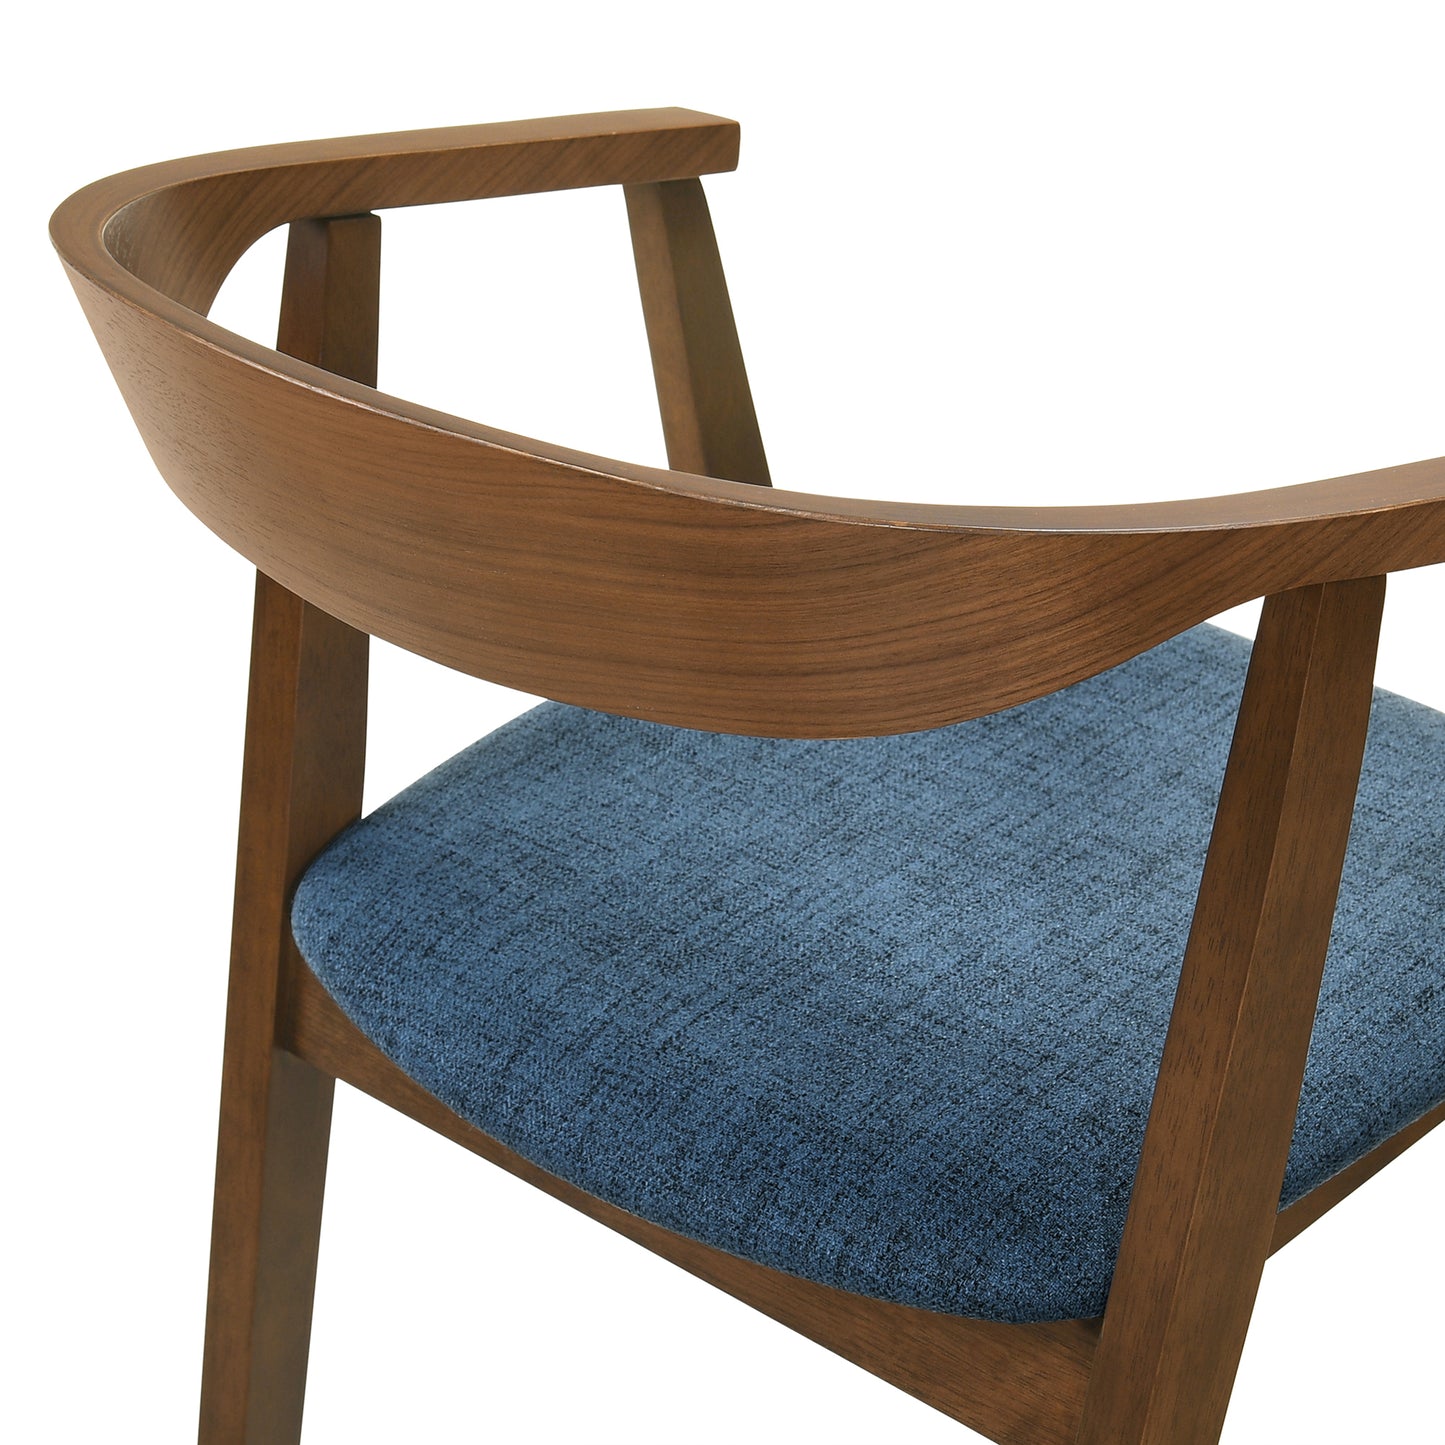 Santana 7 Piece Round Walnut Wood Dining Table Set with Blue Fabric